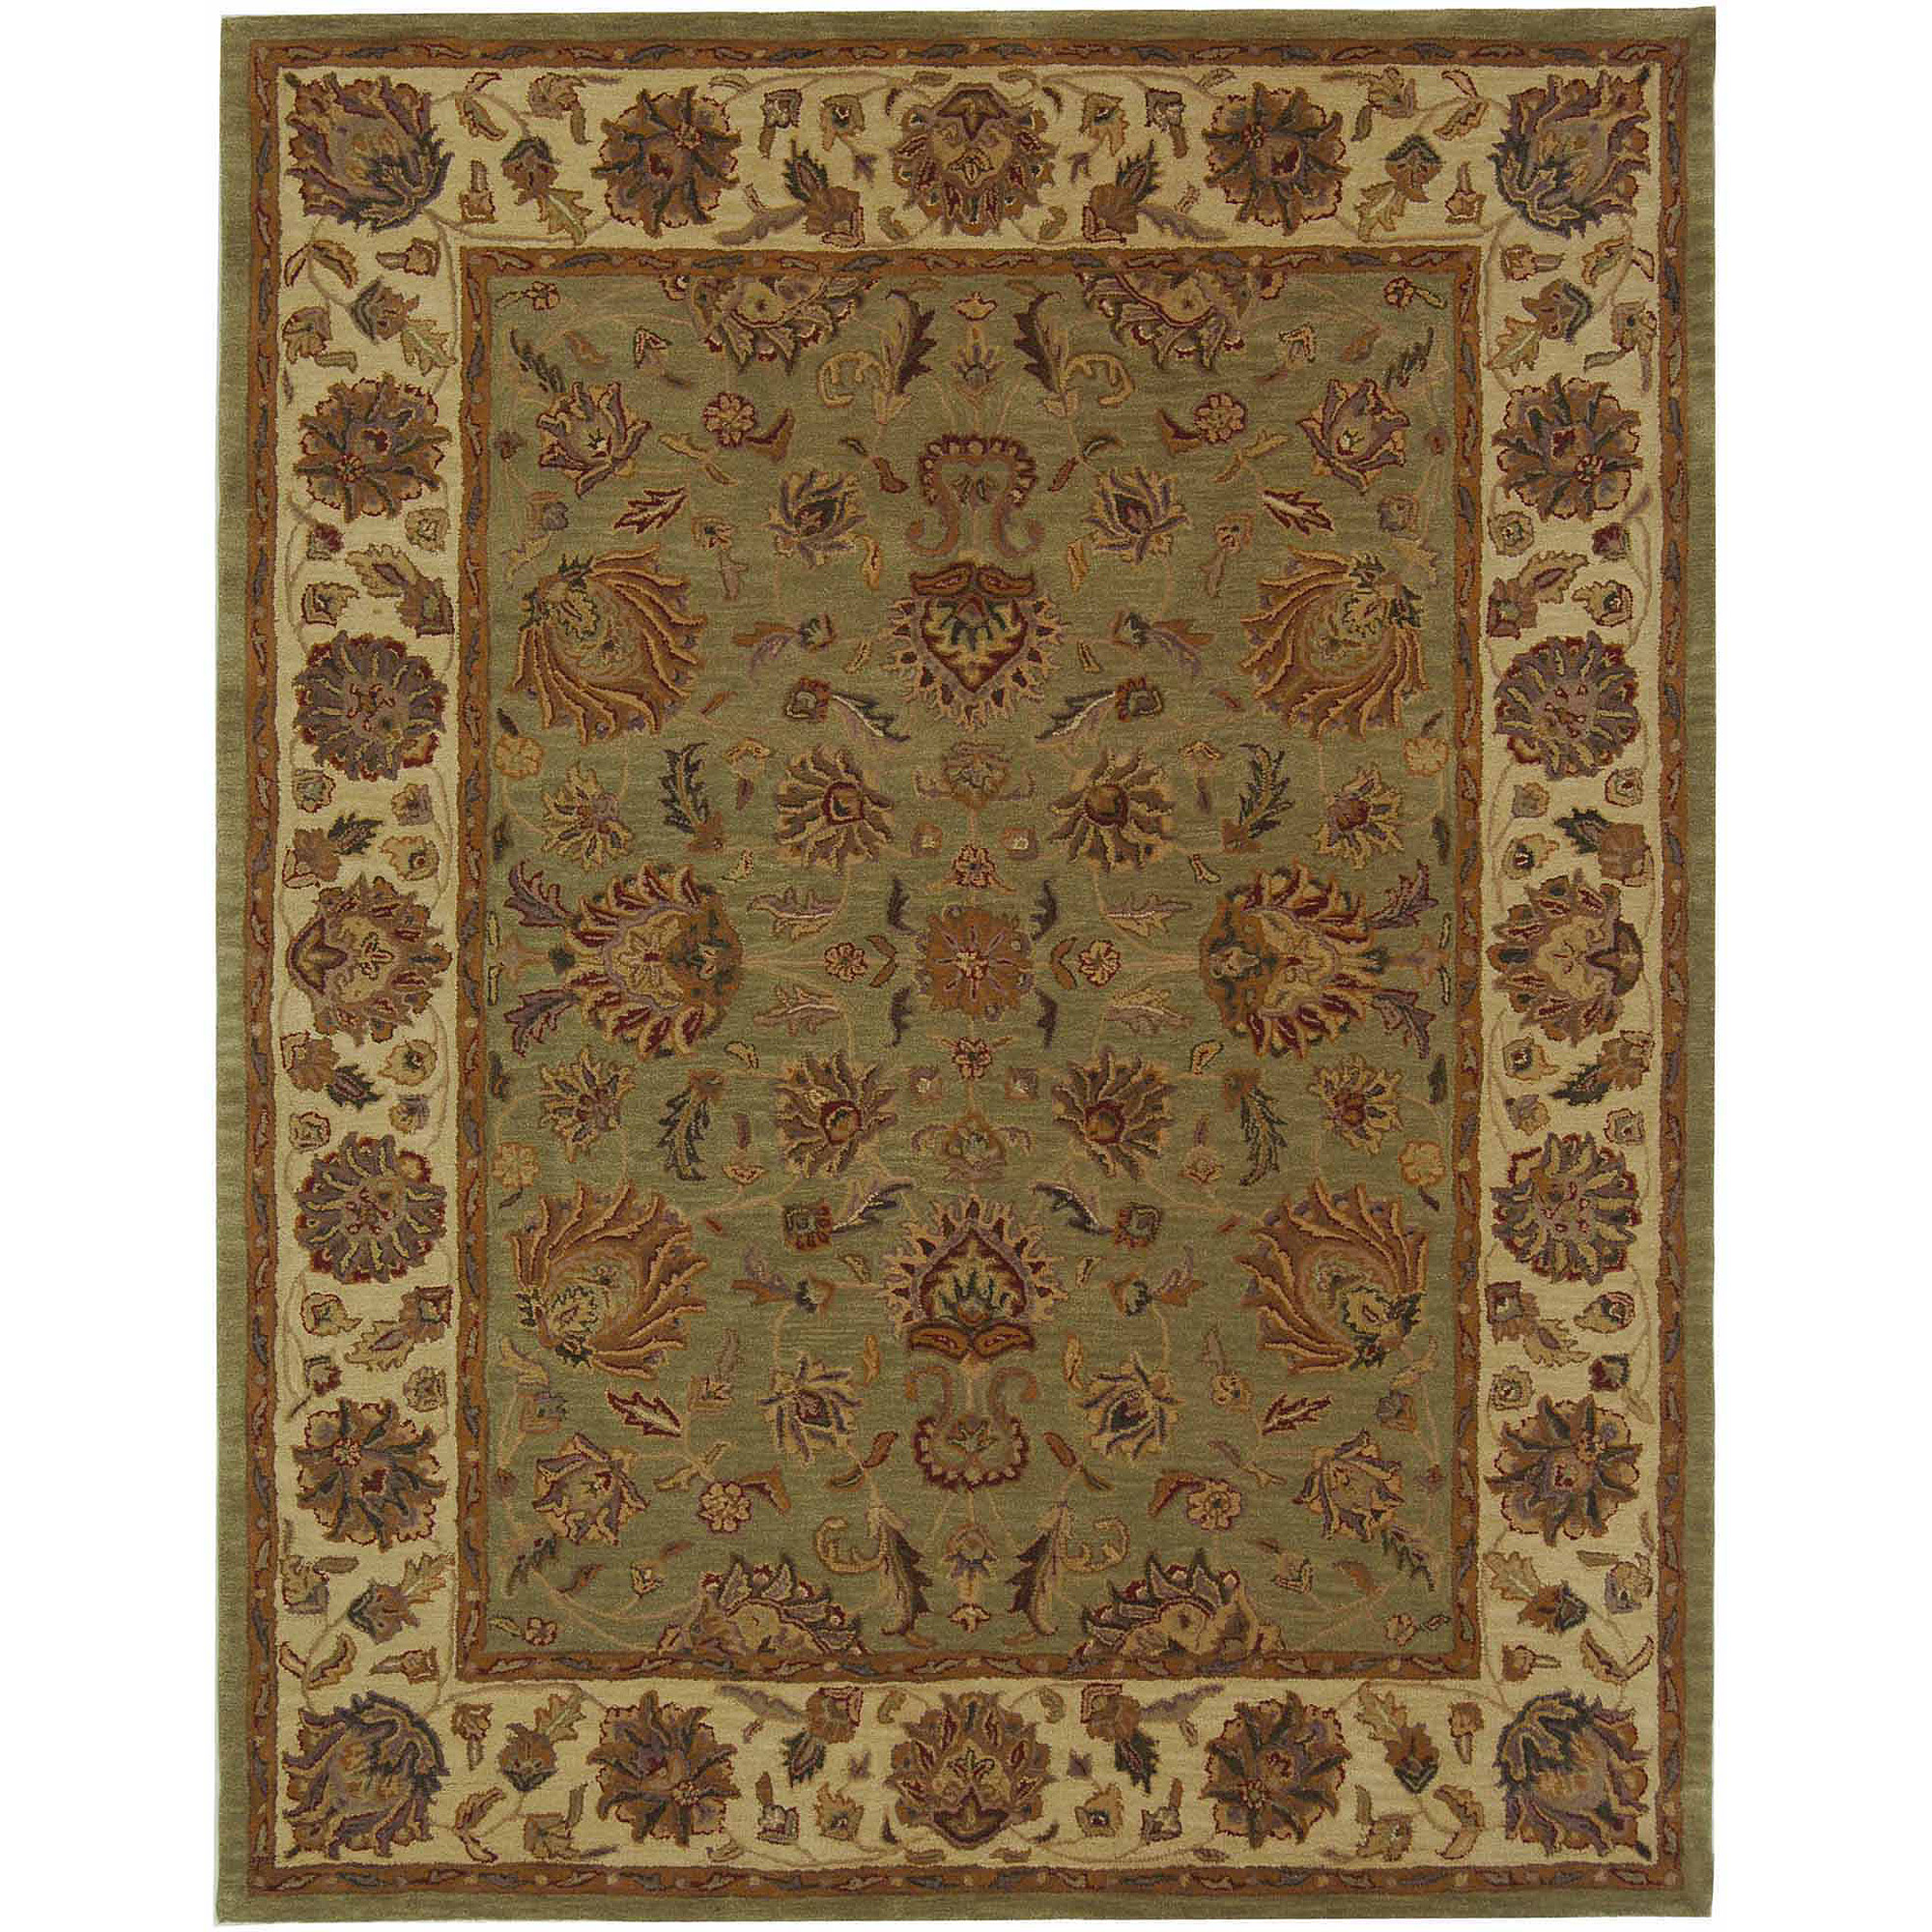 SAFAVIEH Heritage Regis Traditional Wool Area Rug, Green/Gold, 7'6" x 9'6" - image 1 of 10